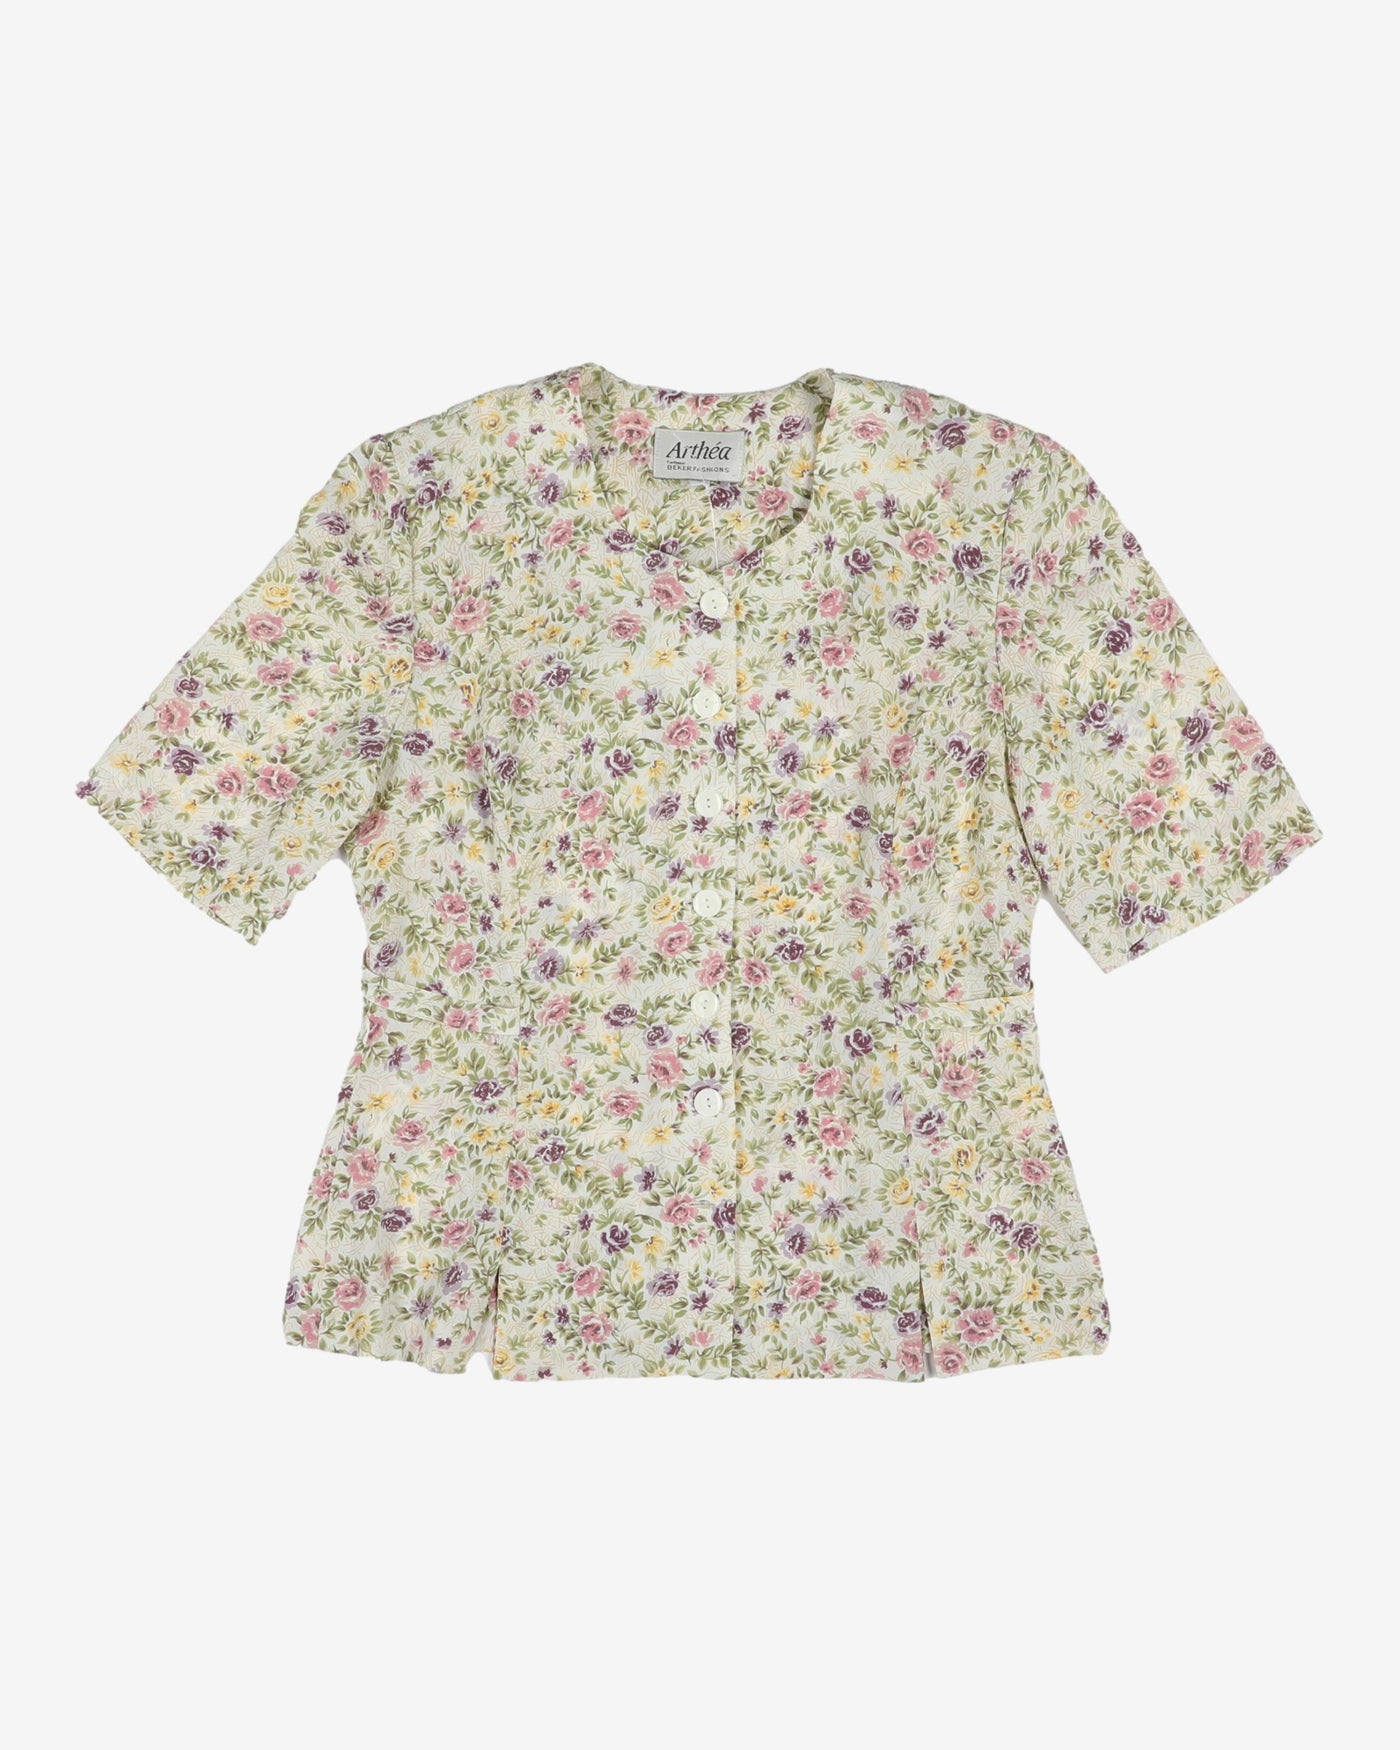 Floral pastel patterned blouse - M